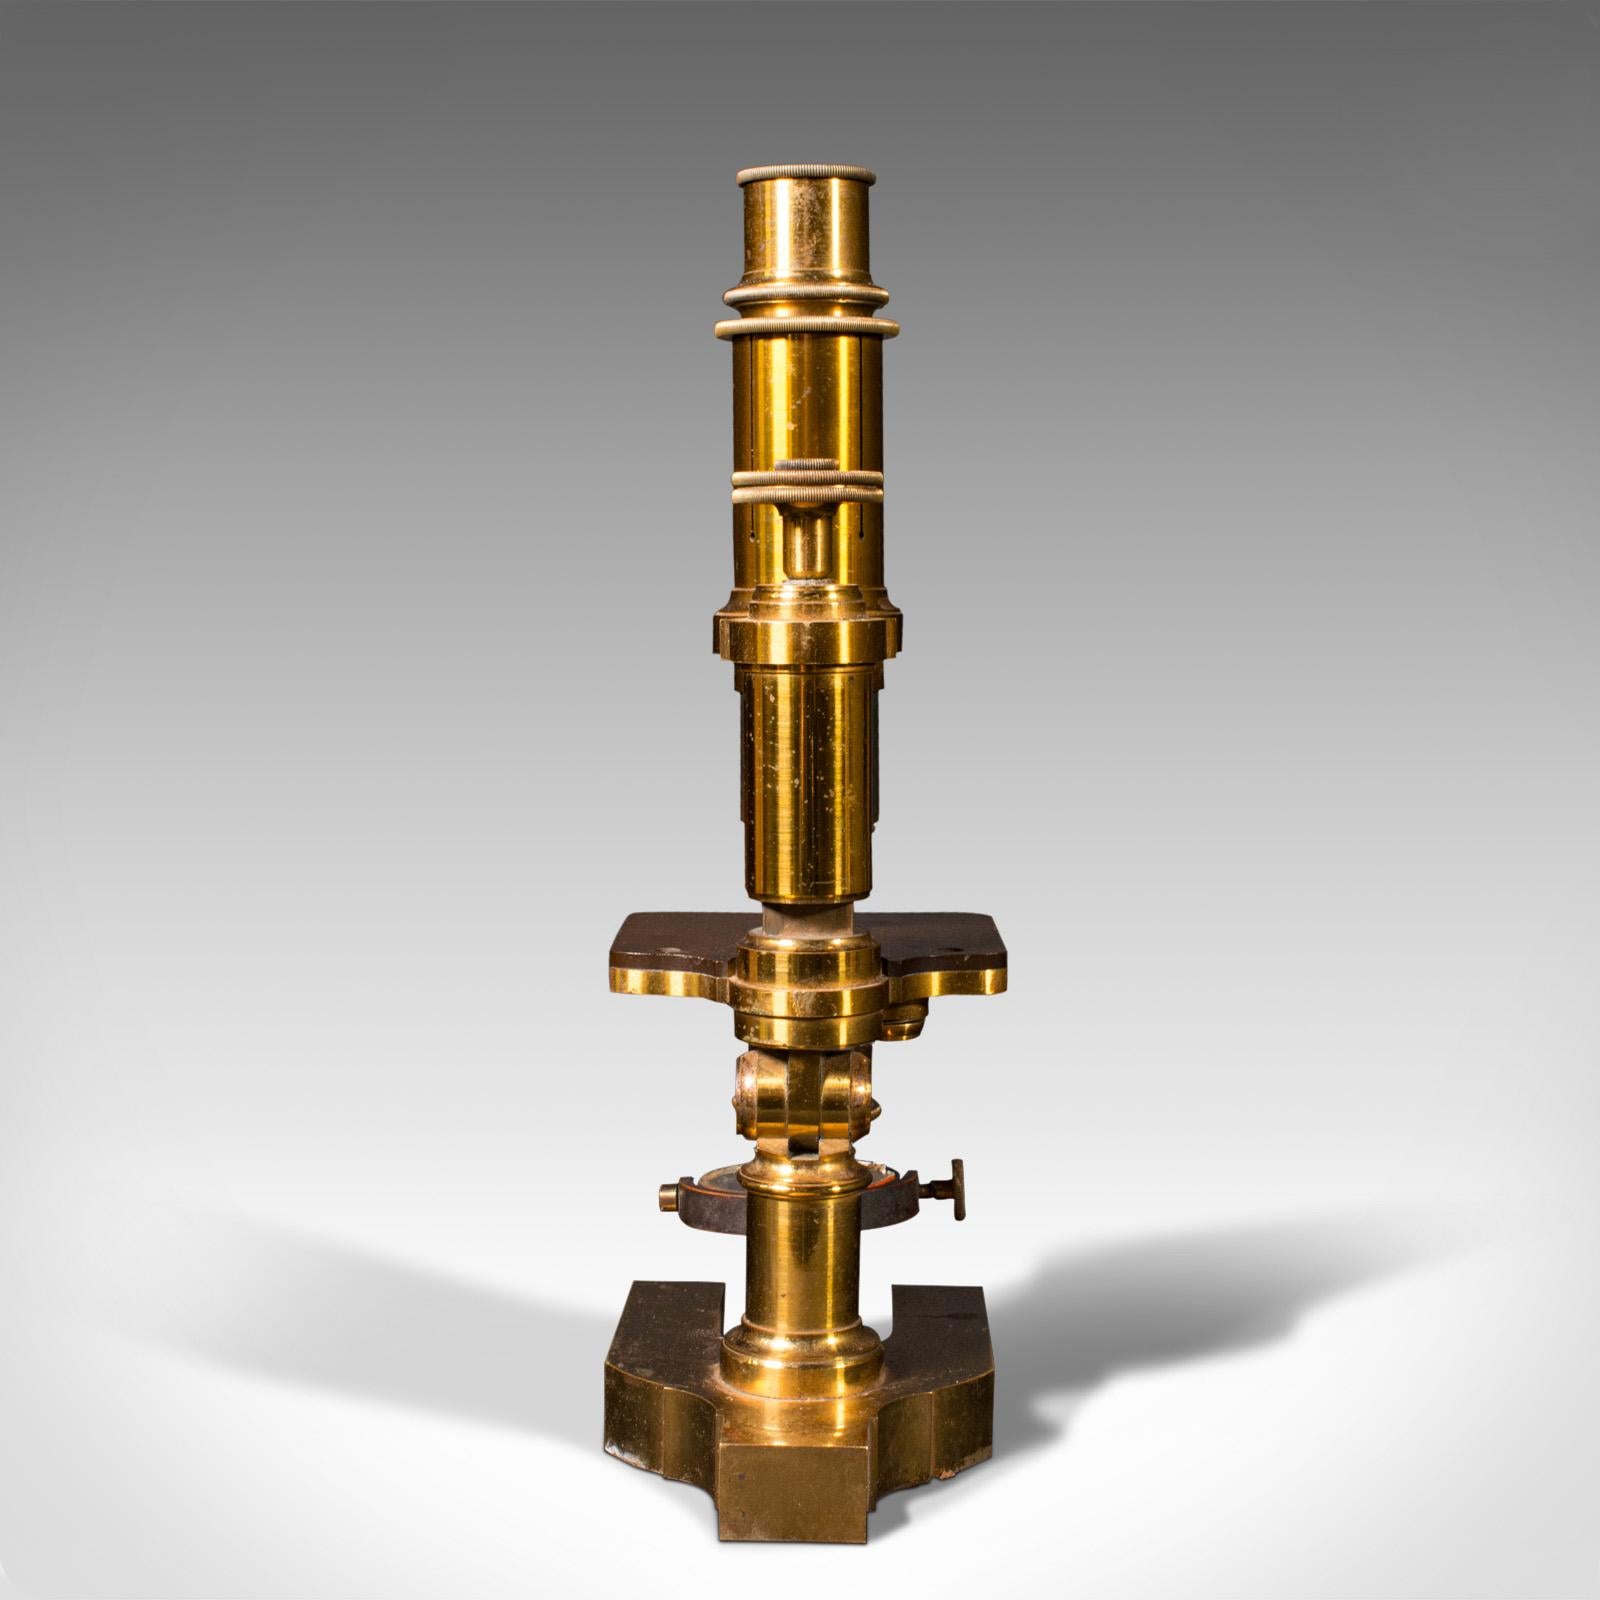 19th Century Antique Monocular Microscope, English Brass, Scientific Instrument, Victorian